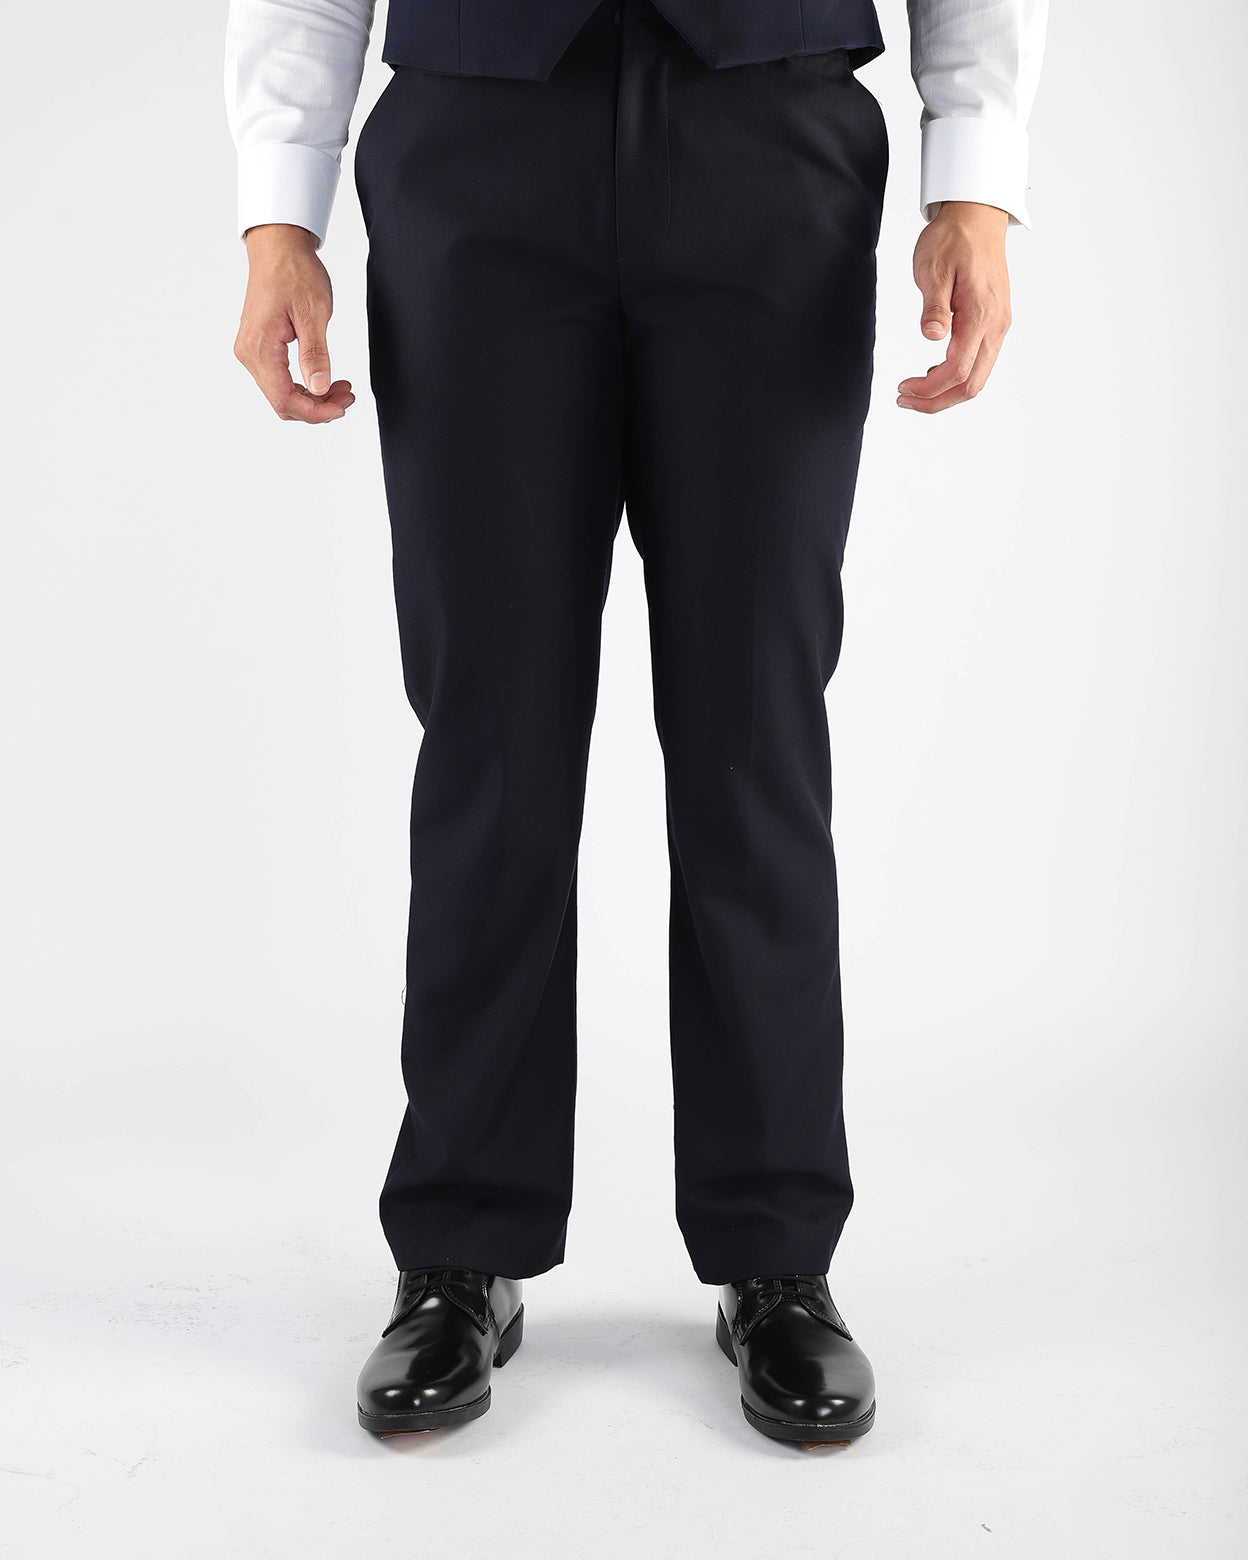 Mens Corporate Uniform Pants with Drawstring Waist